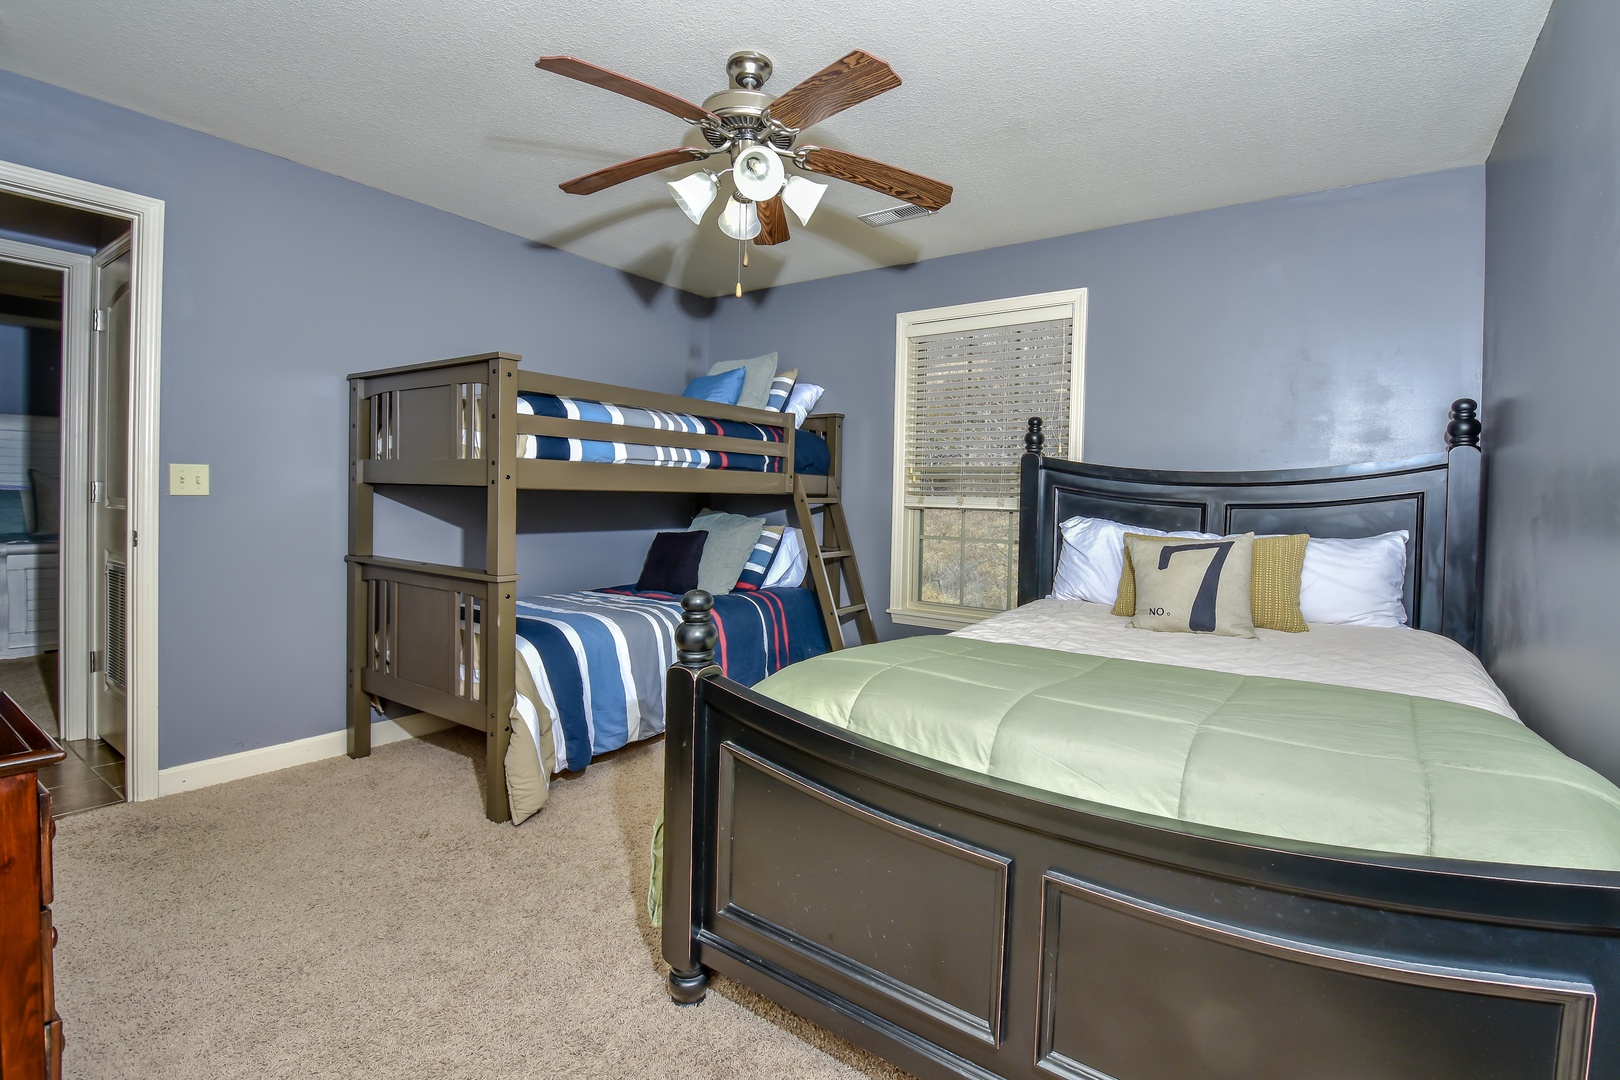 Full-over-full bunks, a queen bed, & Smart TV await in the second bedroom